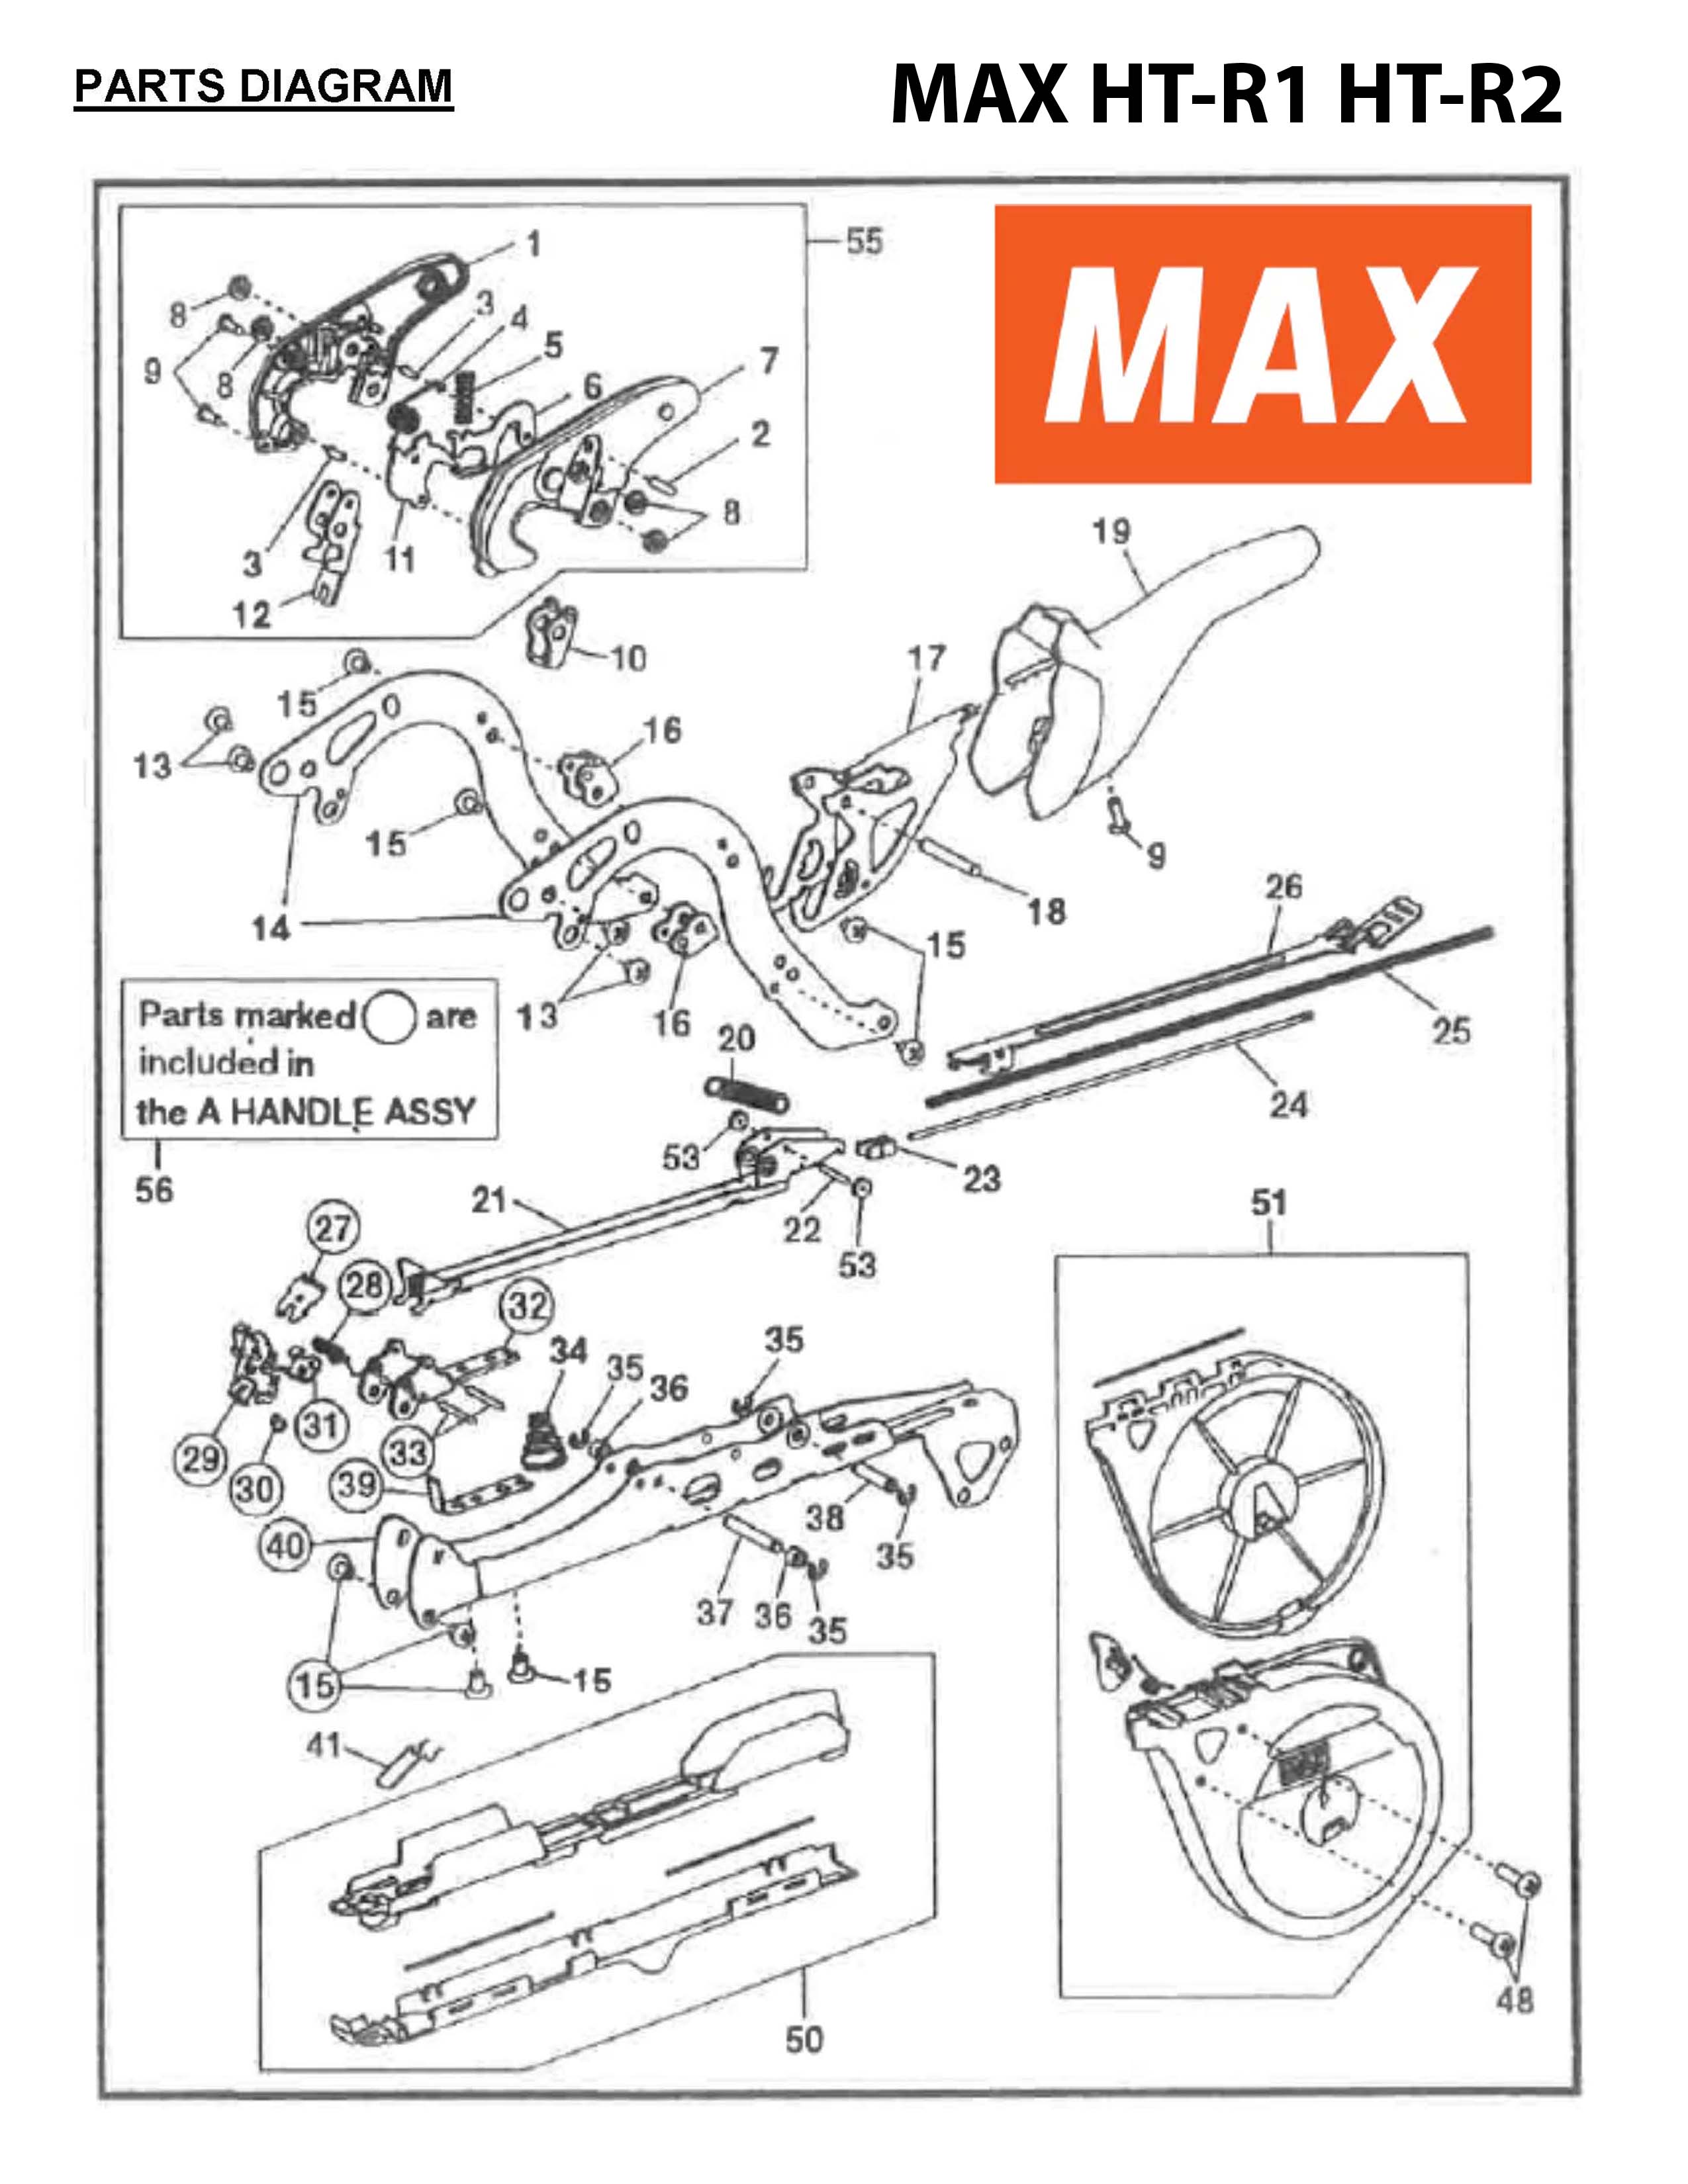 MAX Tapener Part KK29130 COMPRESSION SPRING 9130 Fits MAX HT-R1 HT-R2 #5